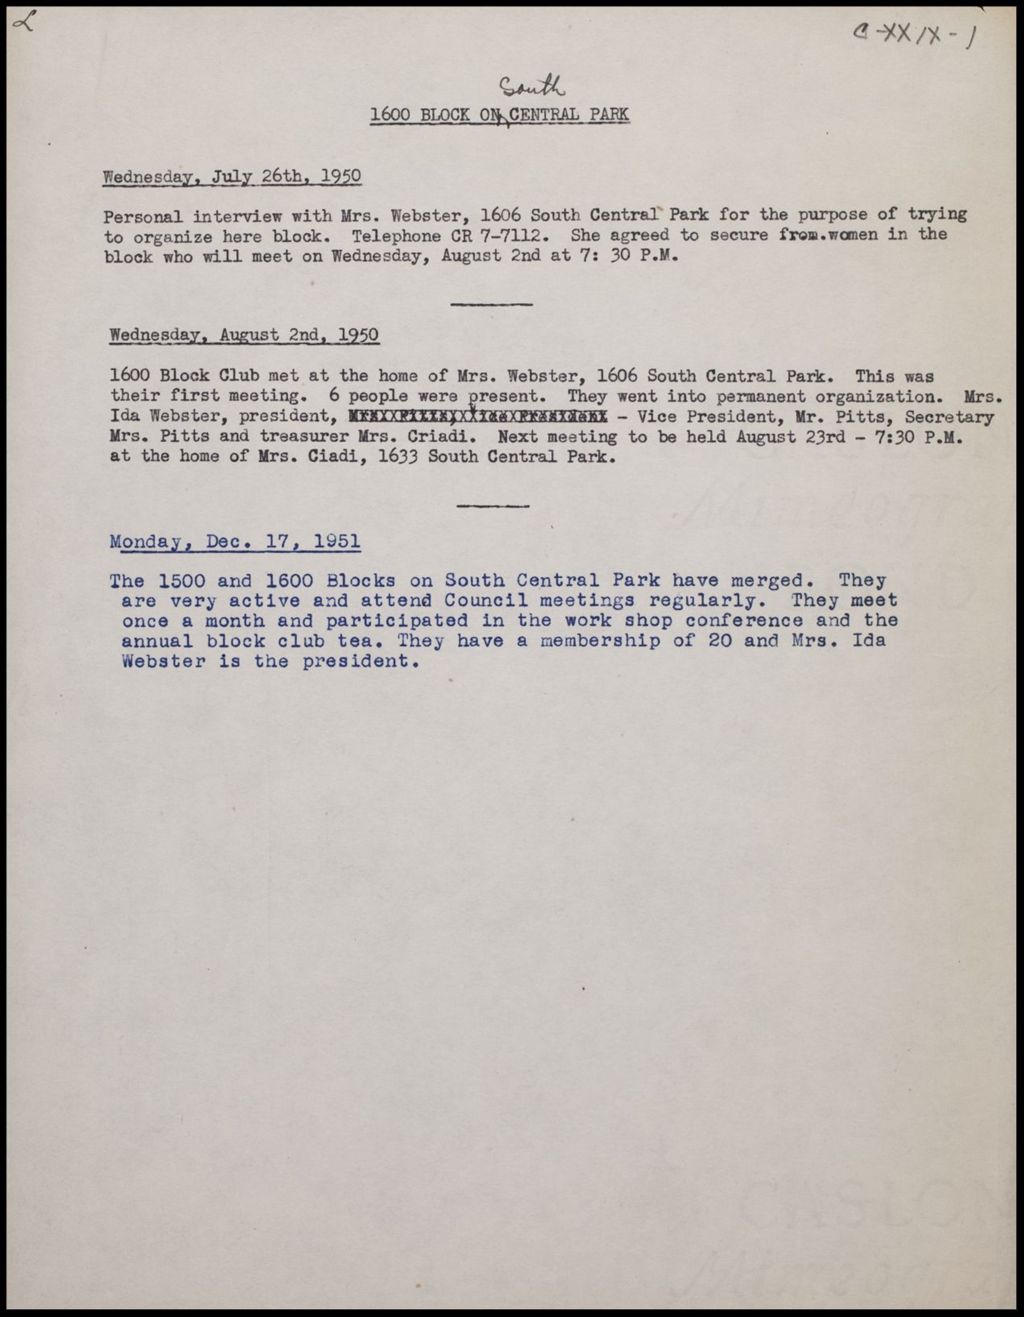 Miniature of Block Club Reports - Central Park on Westside, 1950-1954 (Folder II-2298)